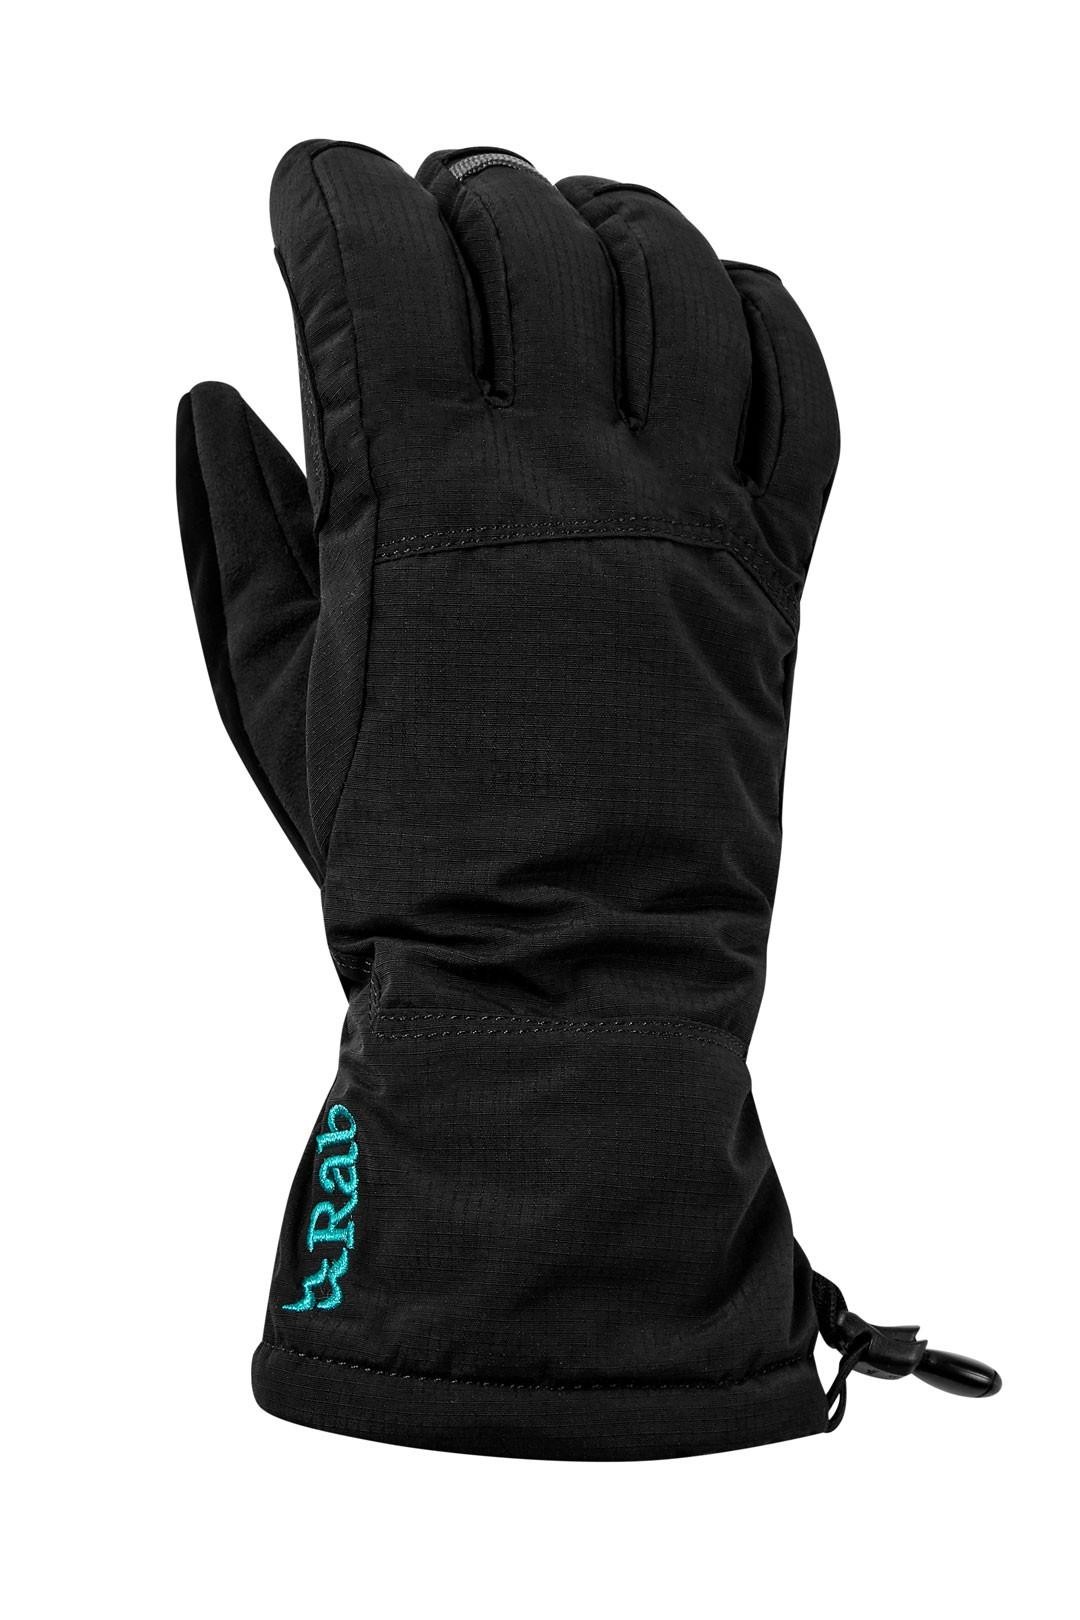 Storm Glove Wm, black